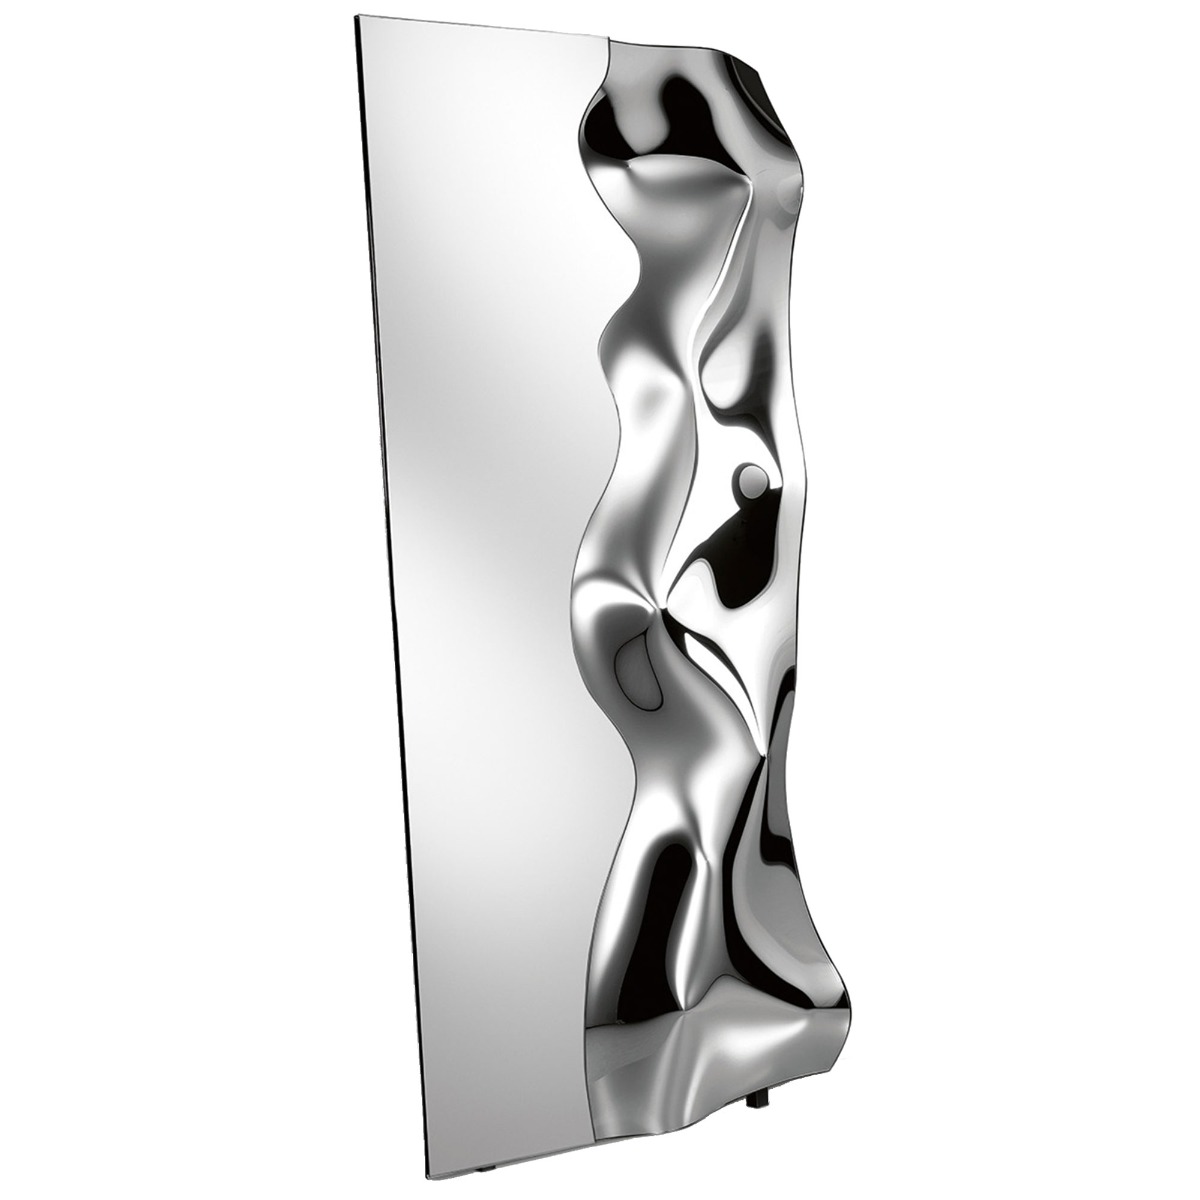 Fiam Phantom Rectangular Mirror 190x90x15cm, Square, Silver | Barker & Stonehouse